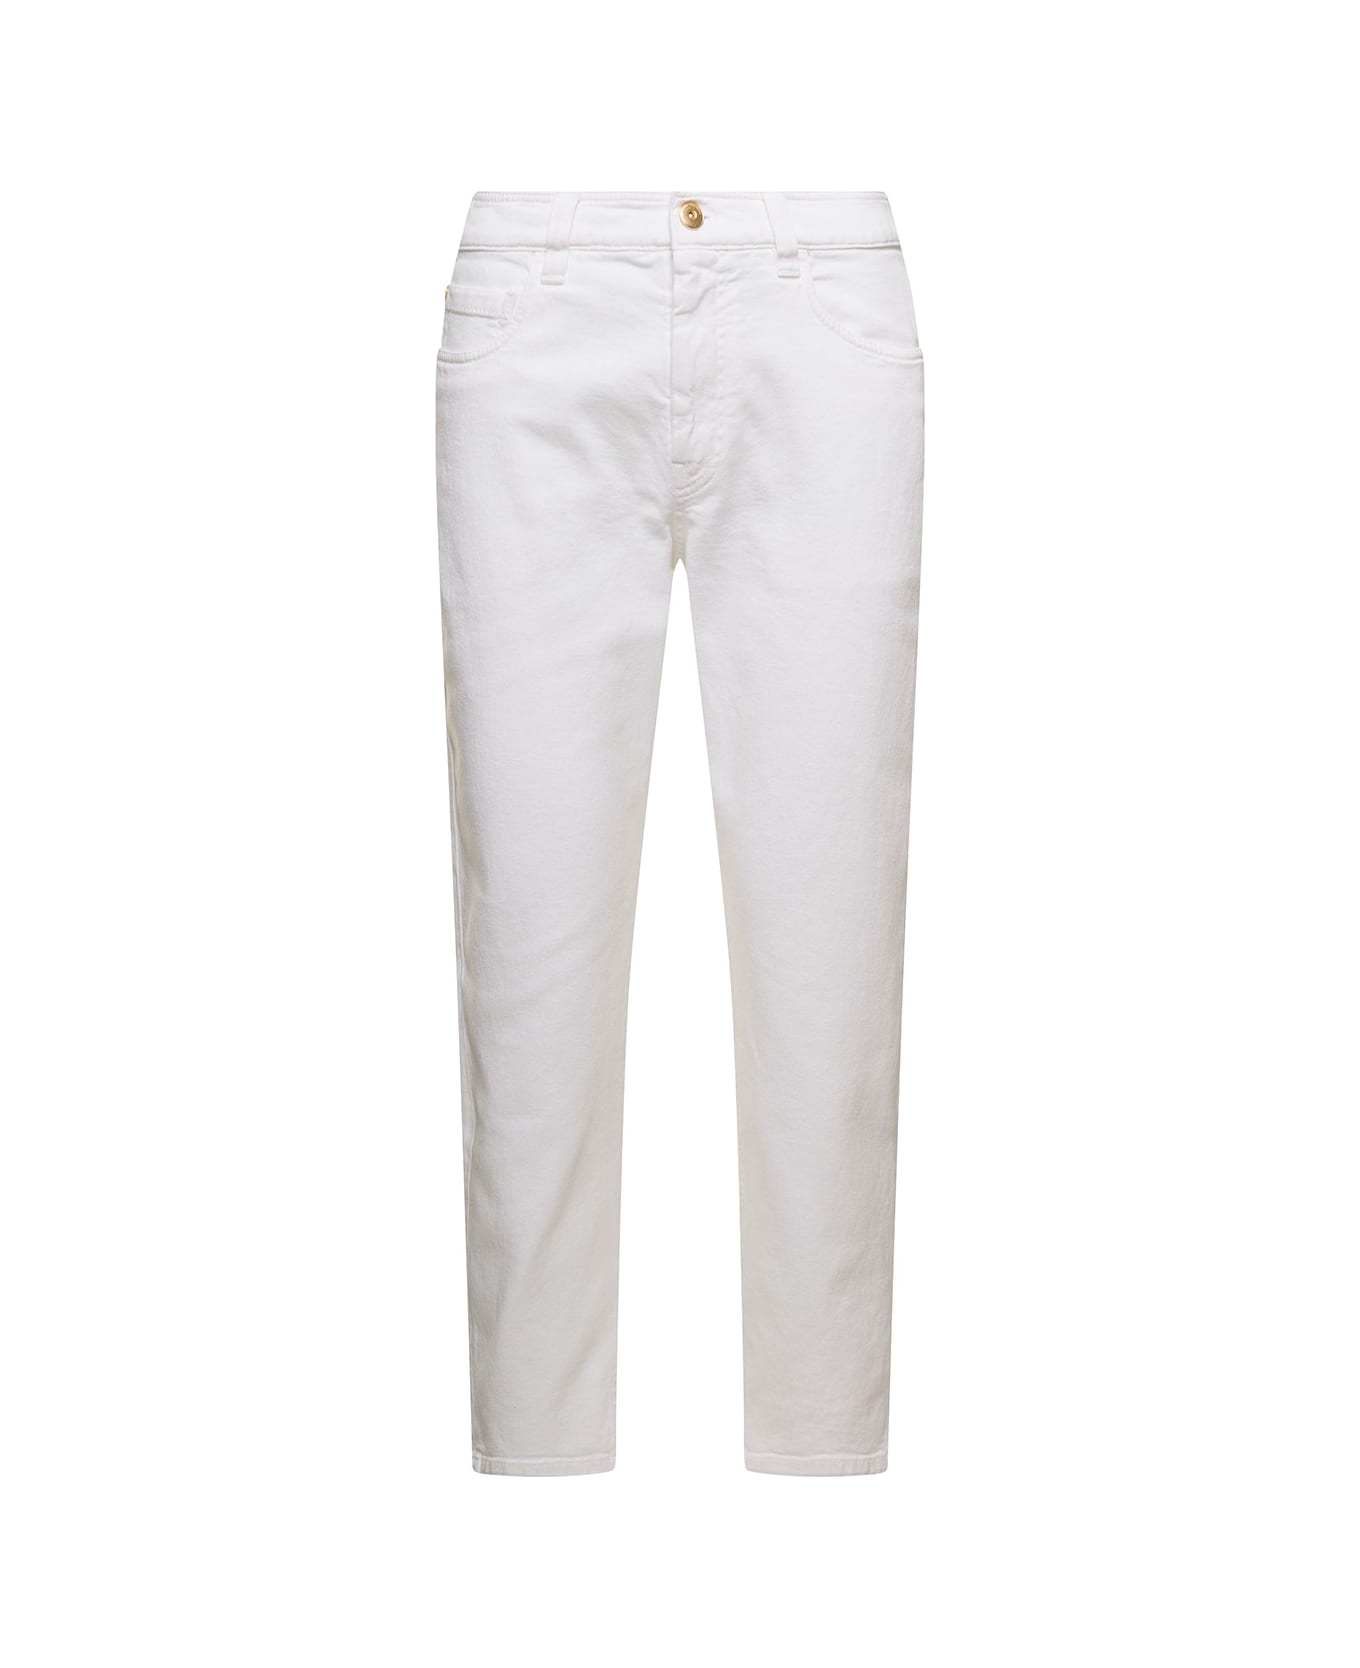 Brunello Cucinelli White 5 Pockets Jeans With Monile Detail In Stretch Cotton Denim Woman - White